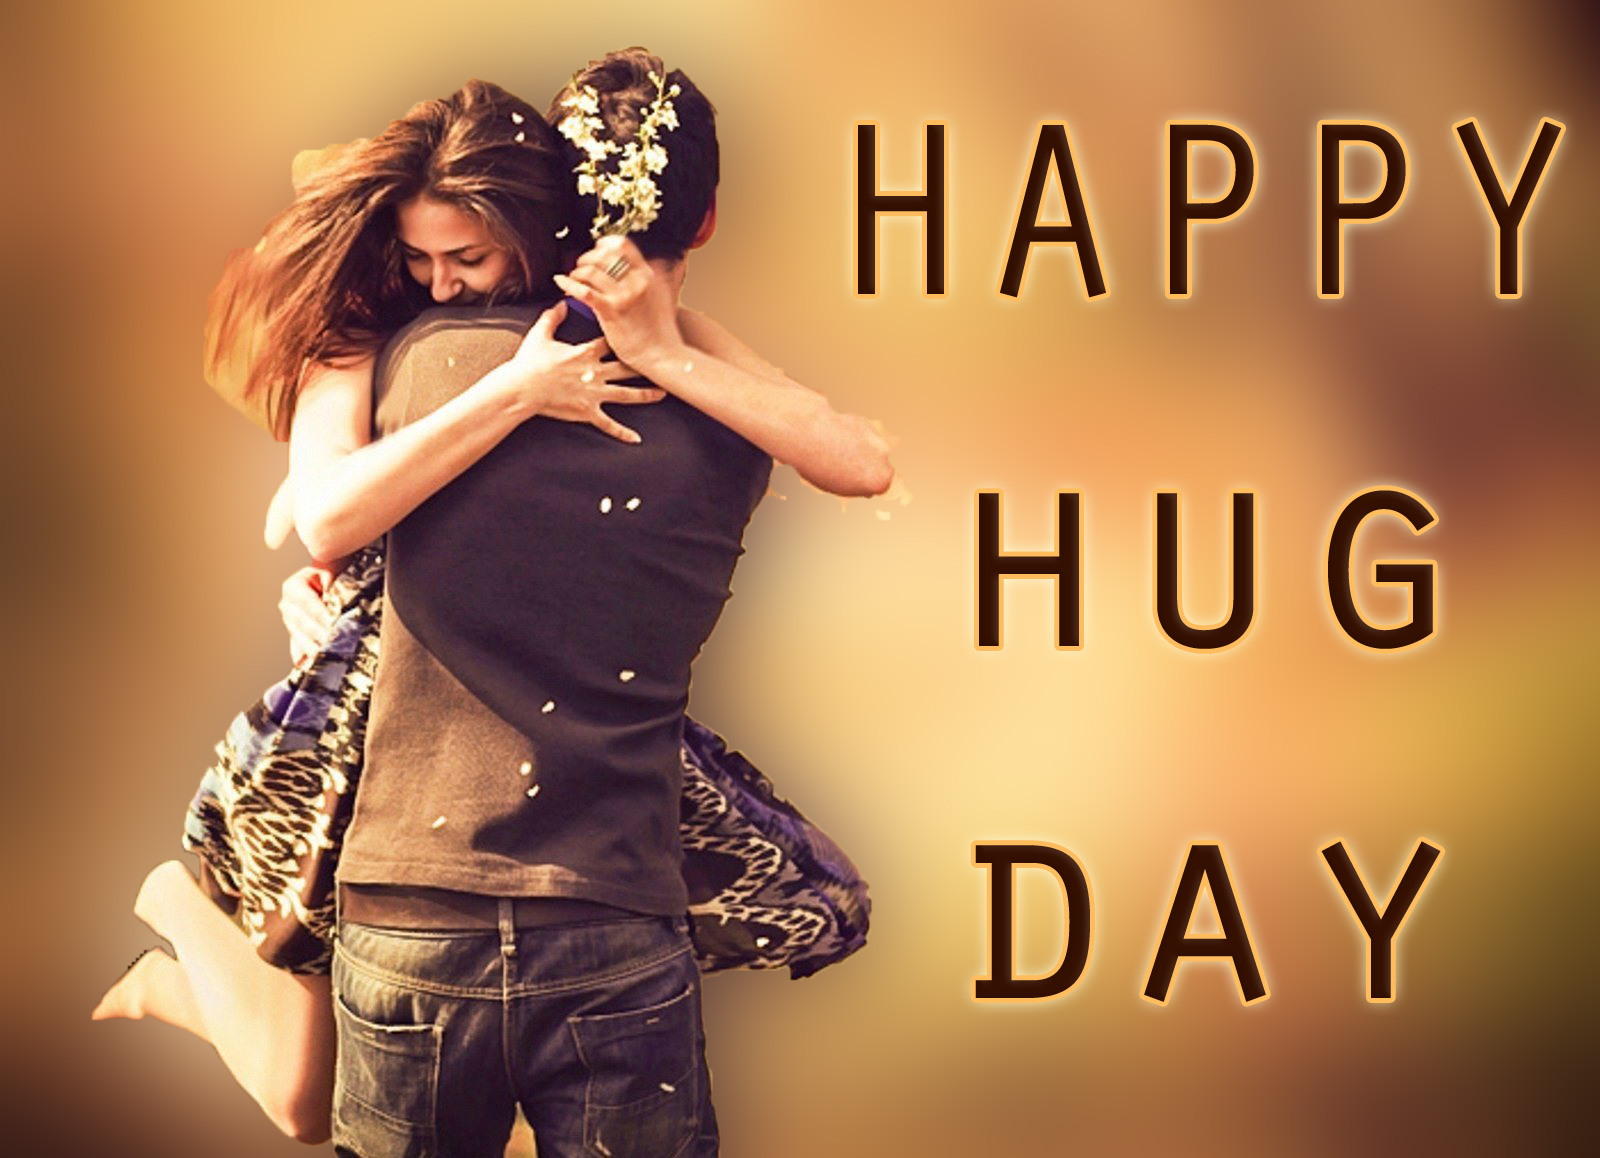 Romantic Happy Hug Day Images With Love - Best Hindi shayari,Love